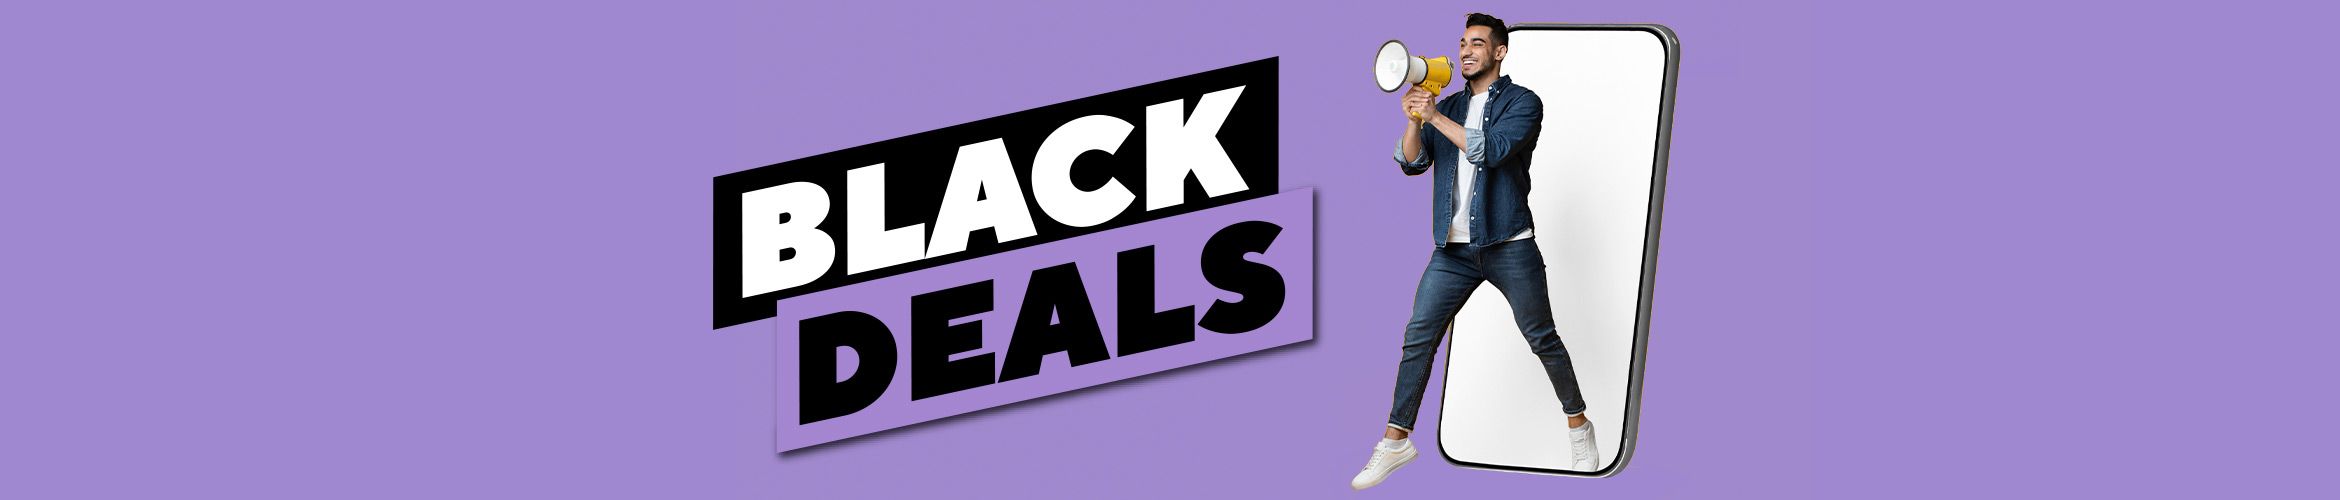 Black Week Deals